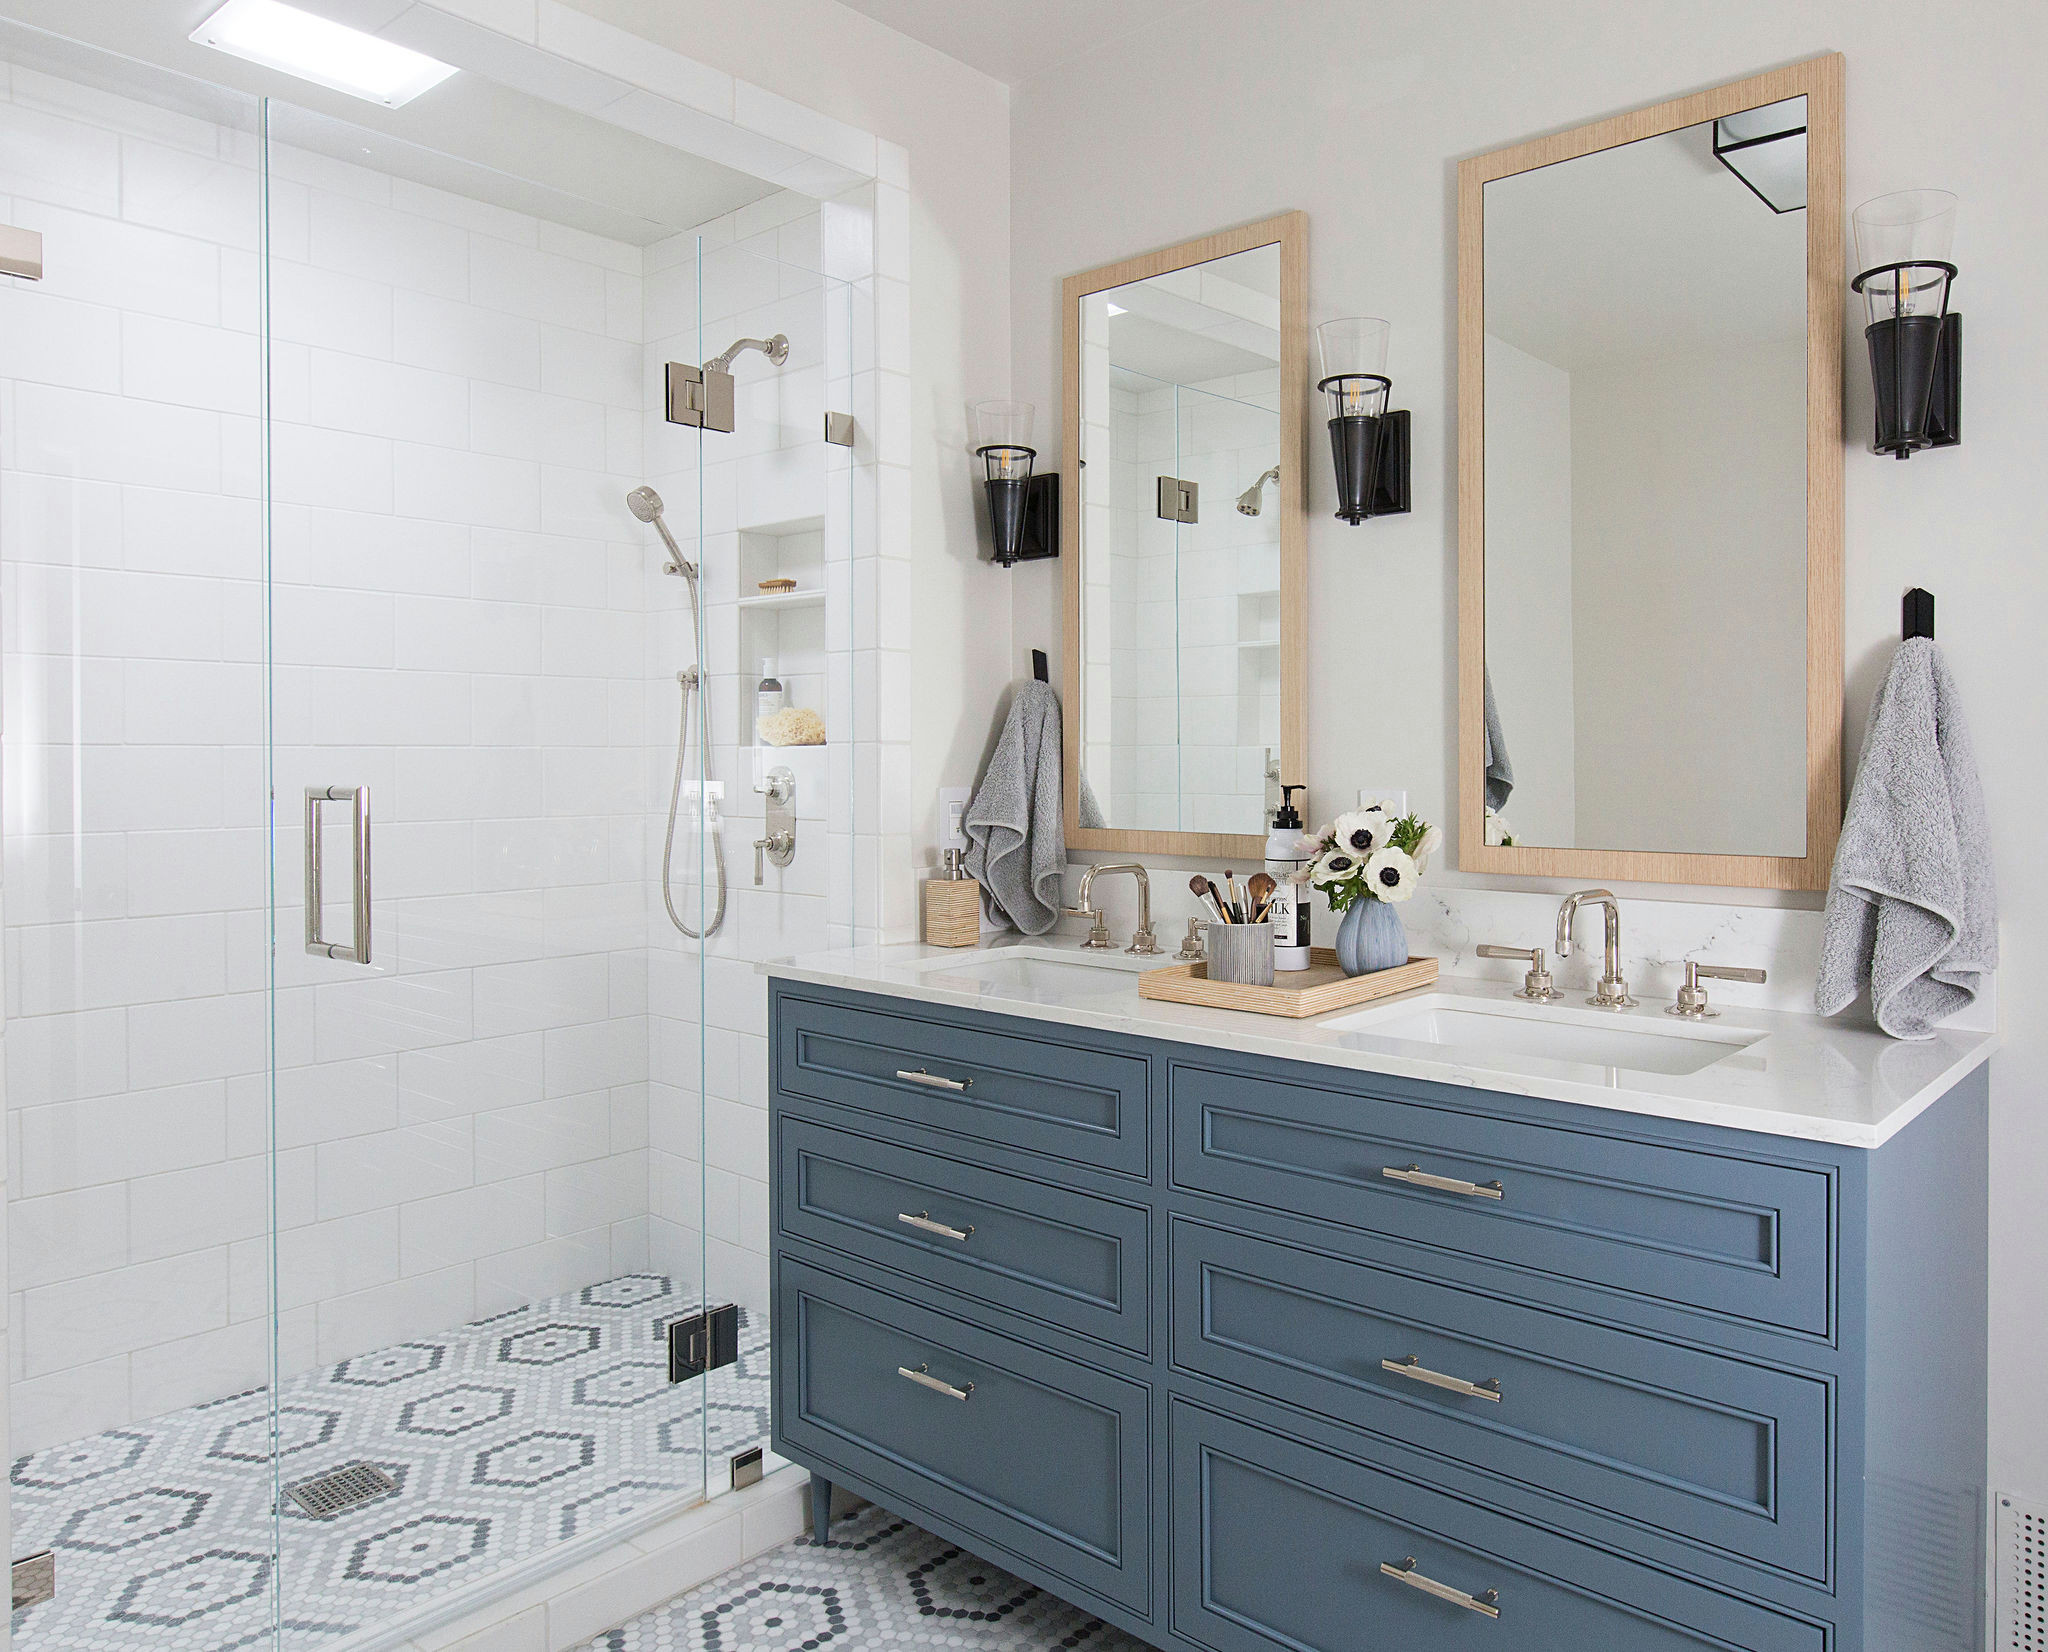 Double Sink Bathroom Pictures Ideas, Double Bath Vanity Ideas